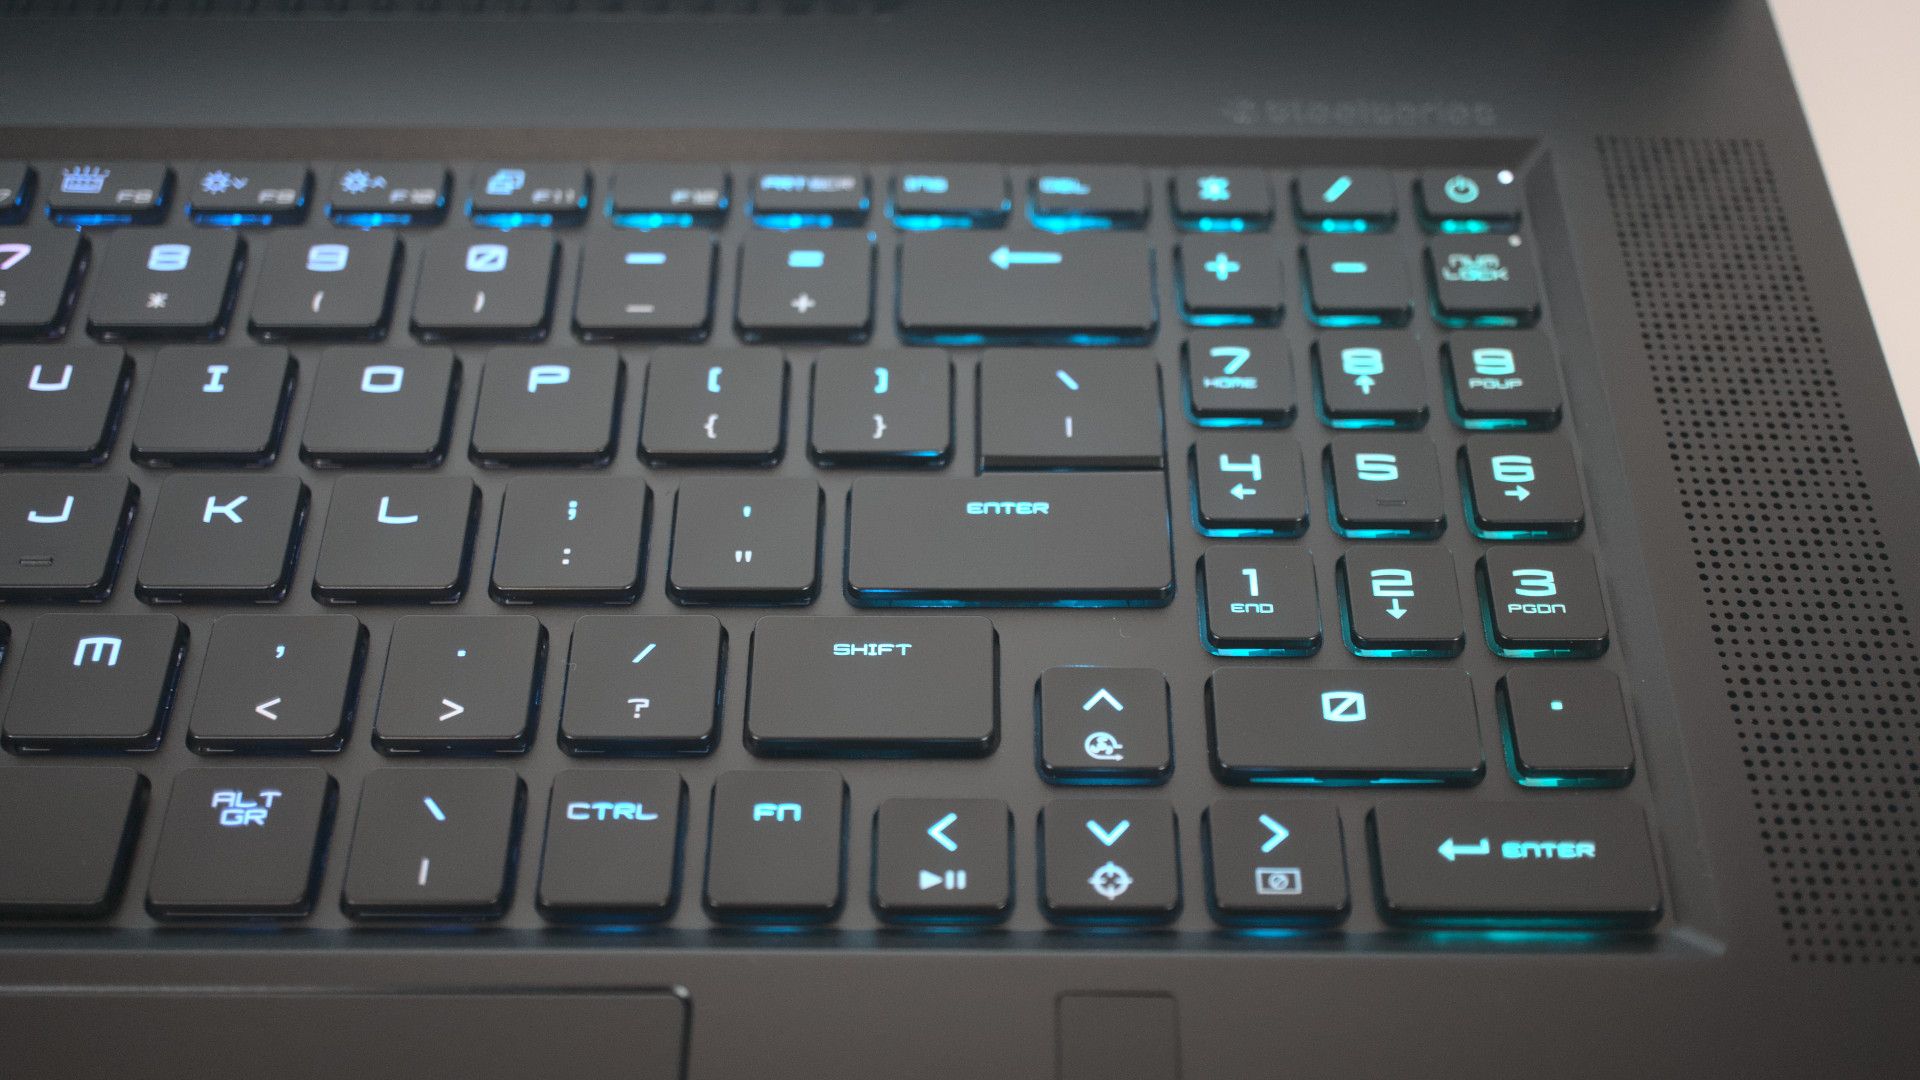 msi-titan-gt77-laptop-keyboard-3